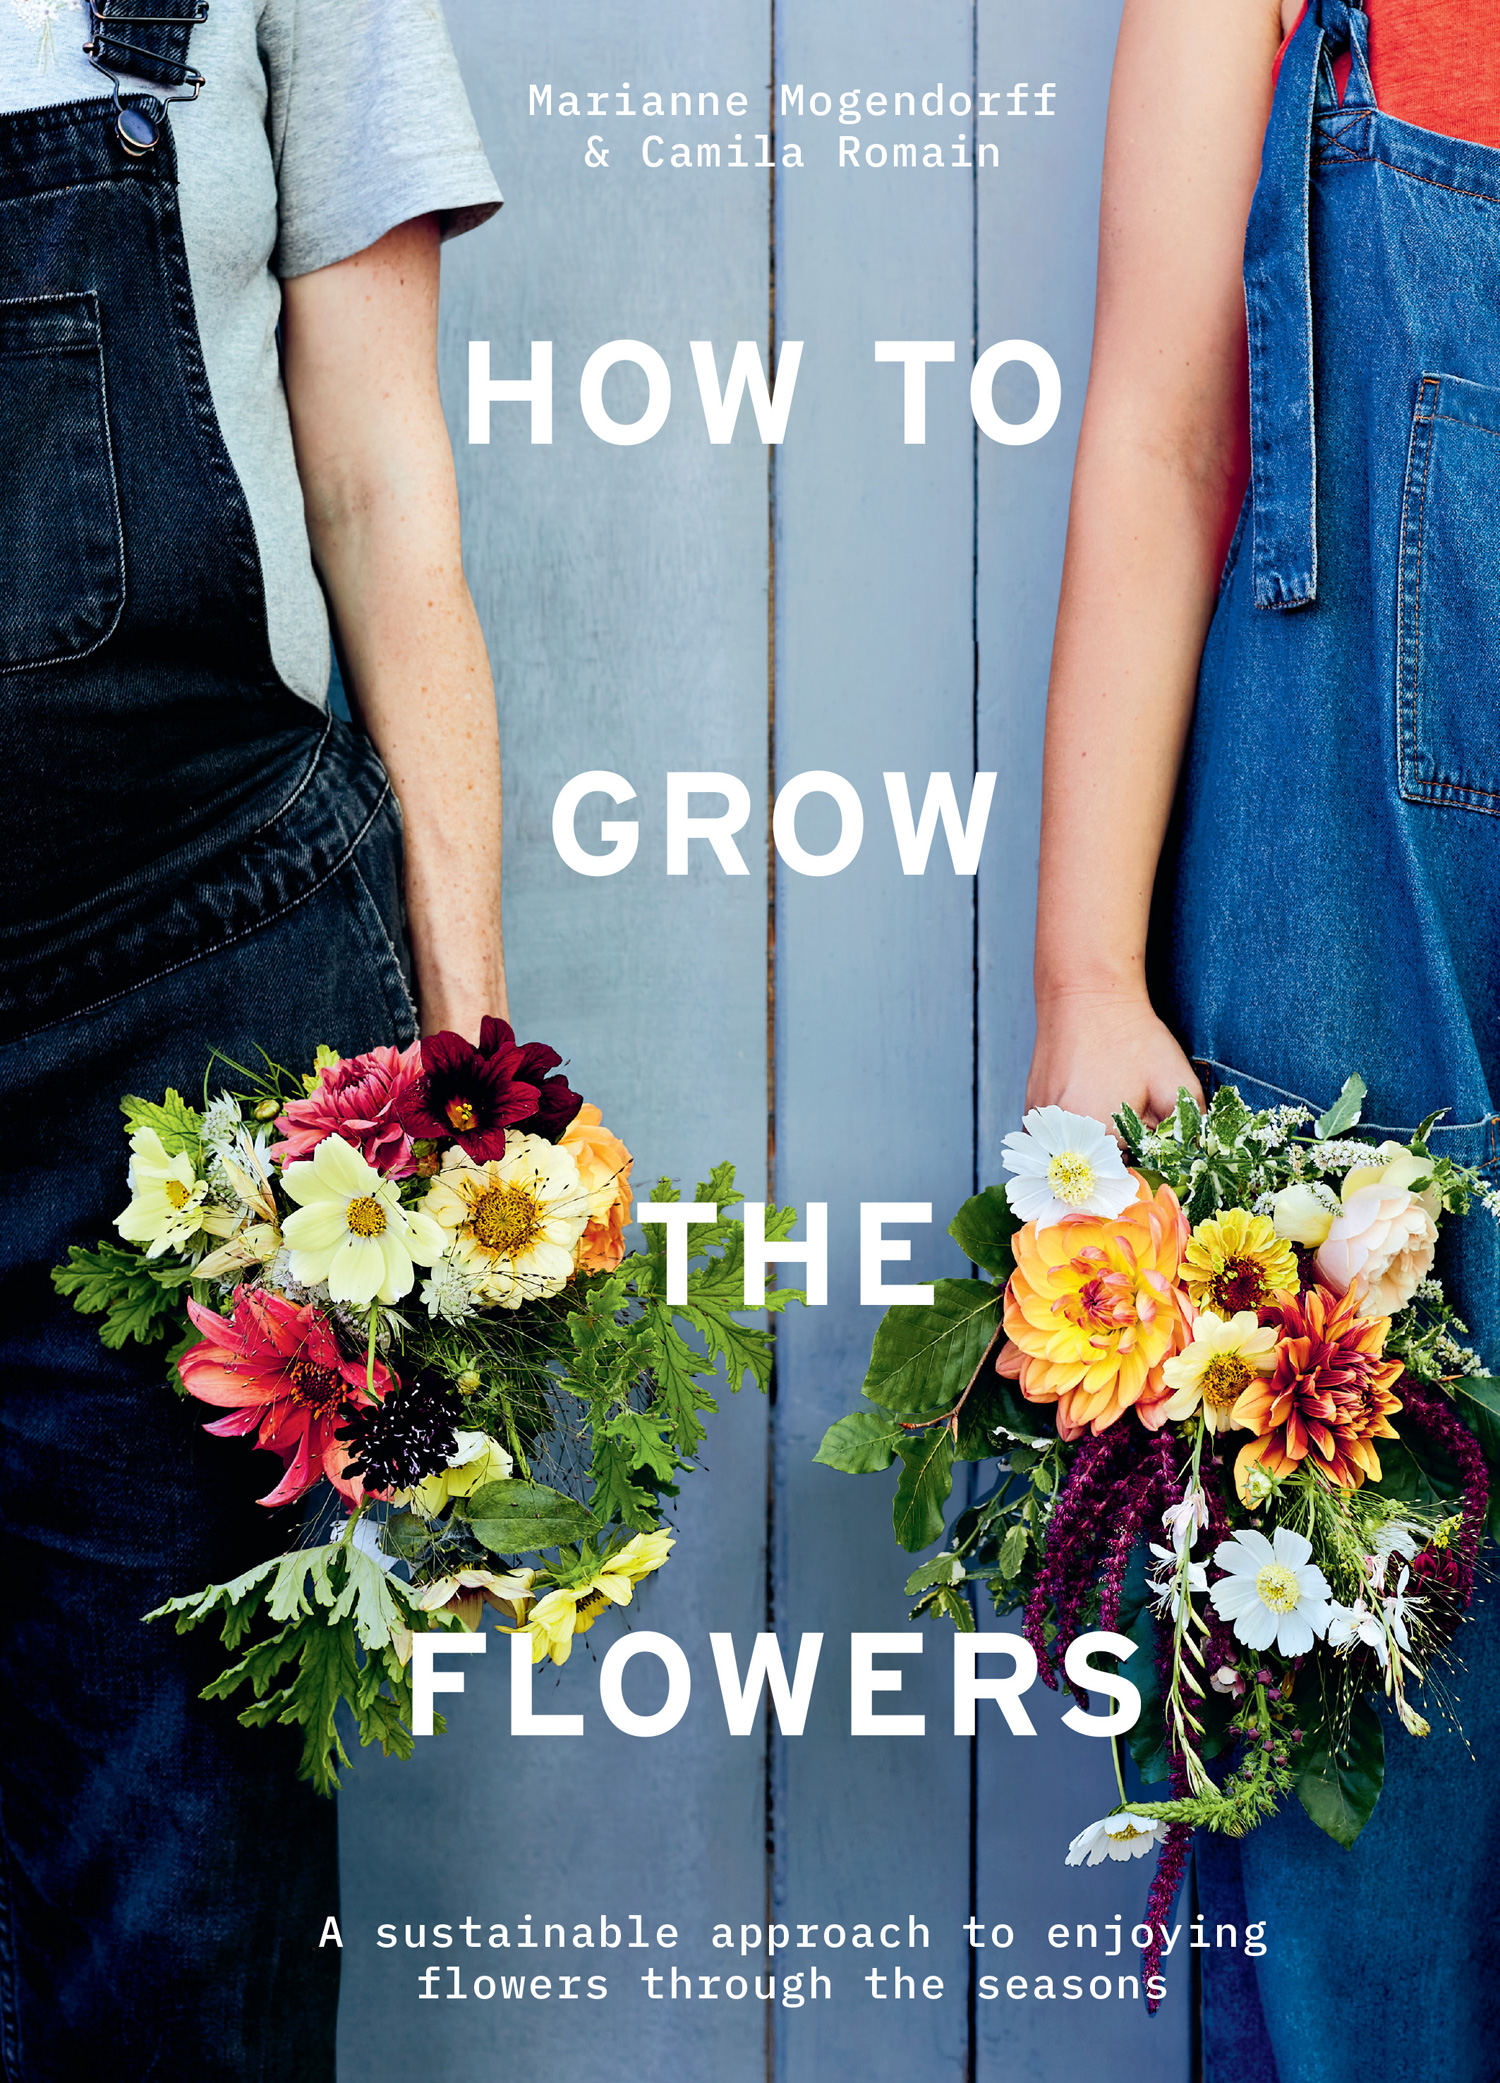 A Little Bird - How To Grow The Flowers